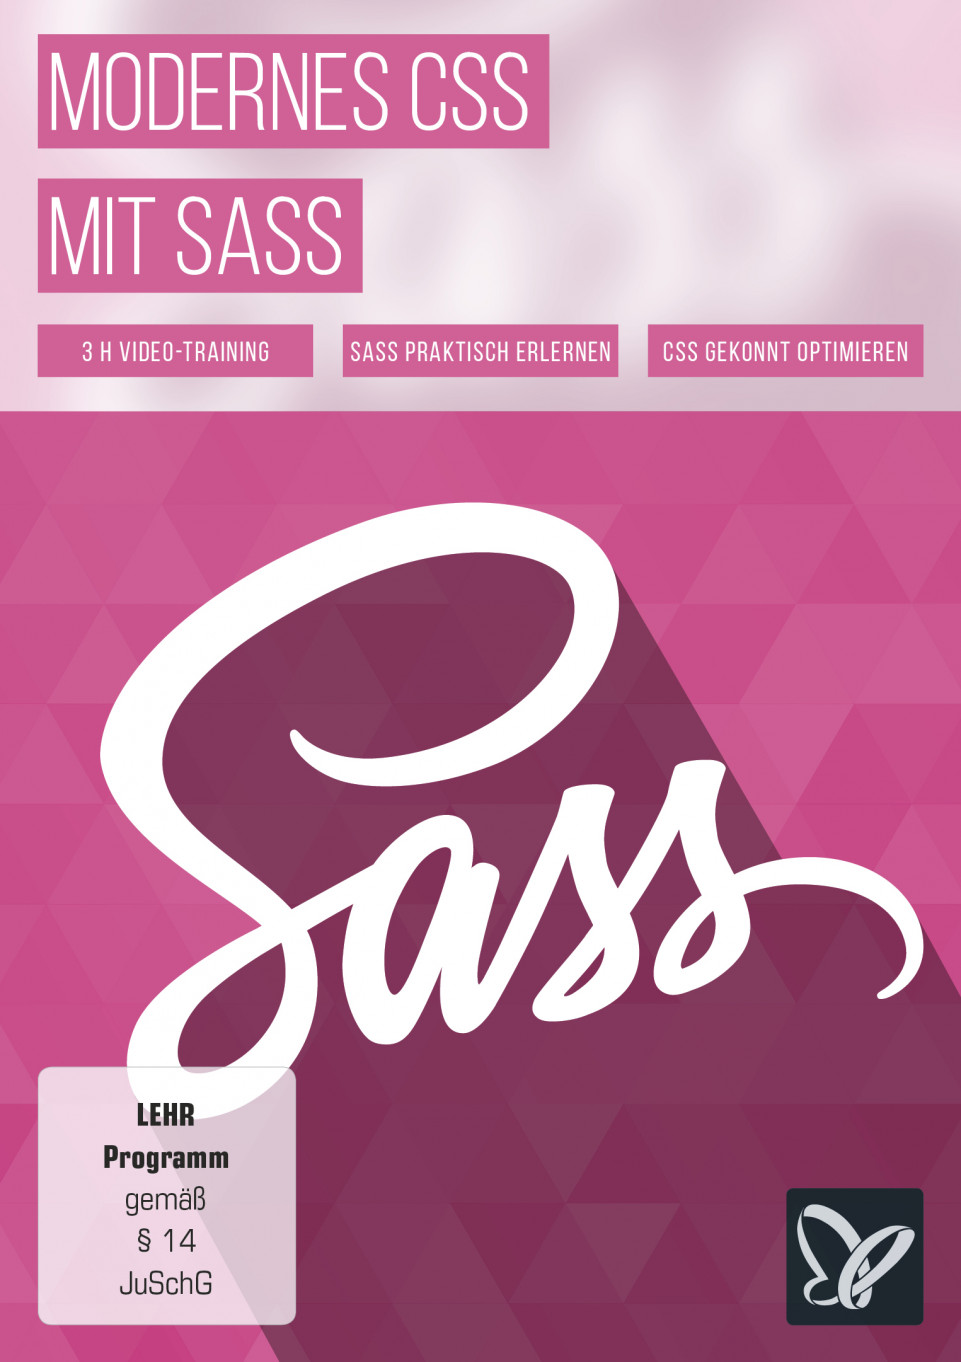 Modernes CSS mit Sass – Praxis-Tutorial